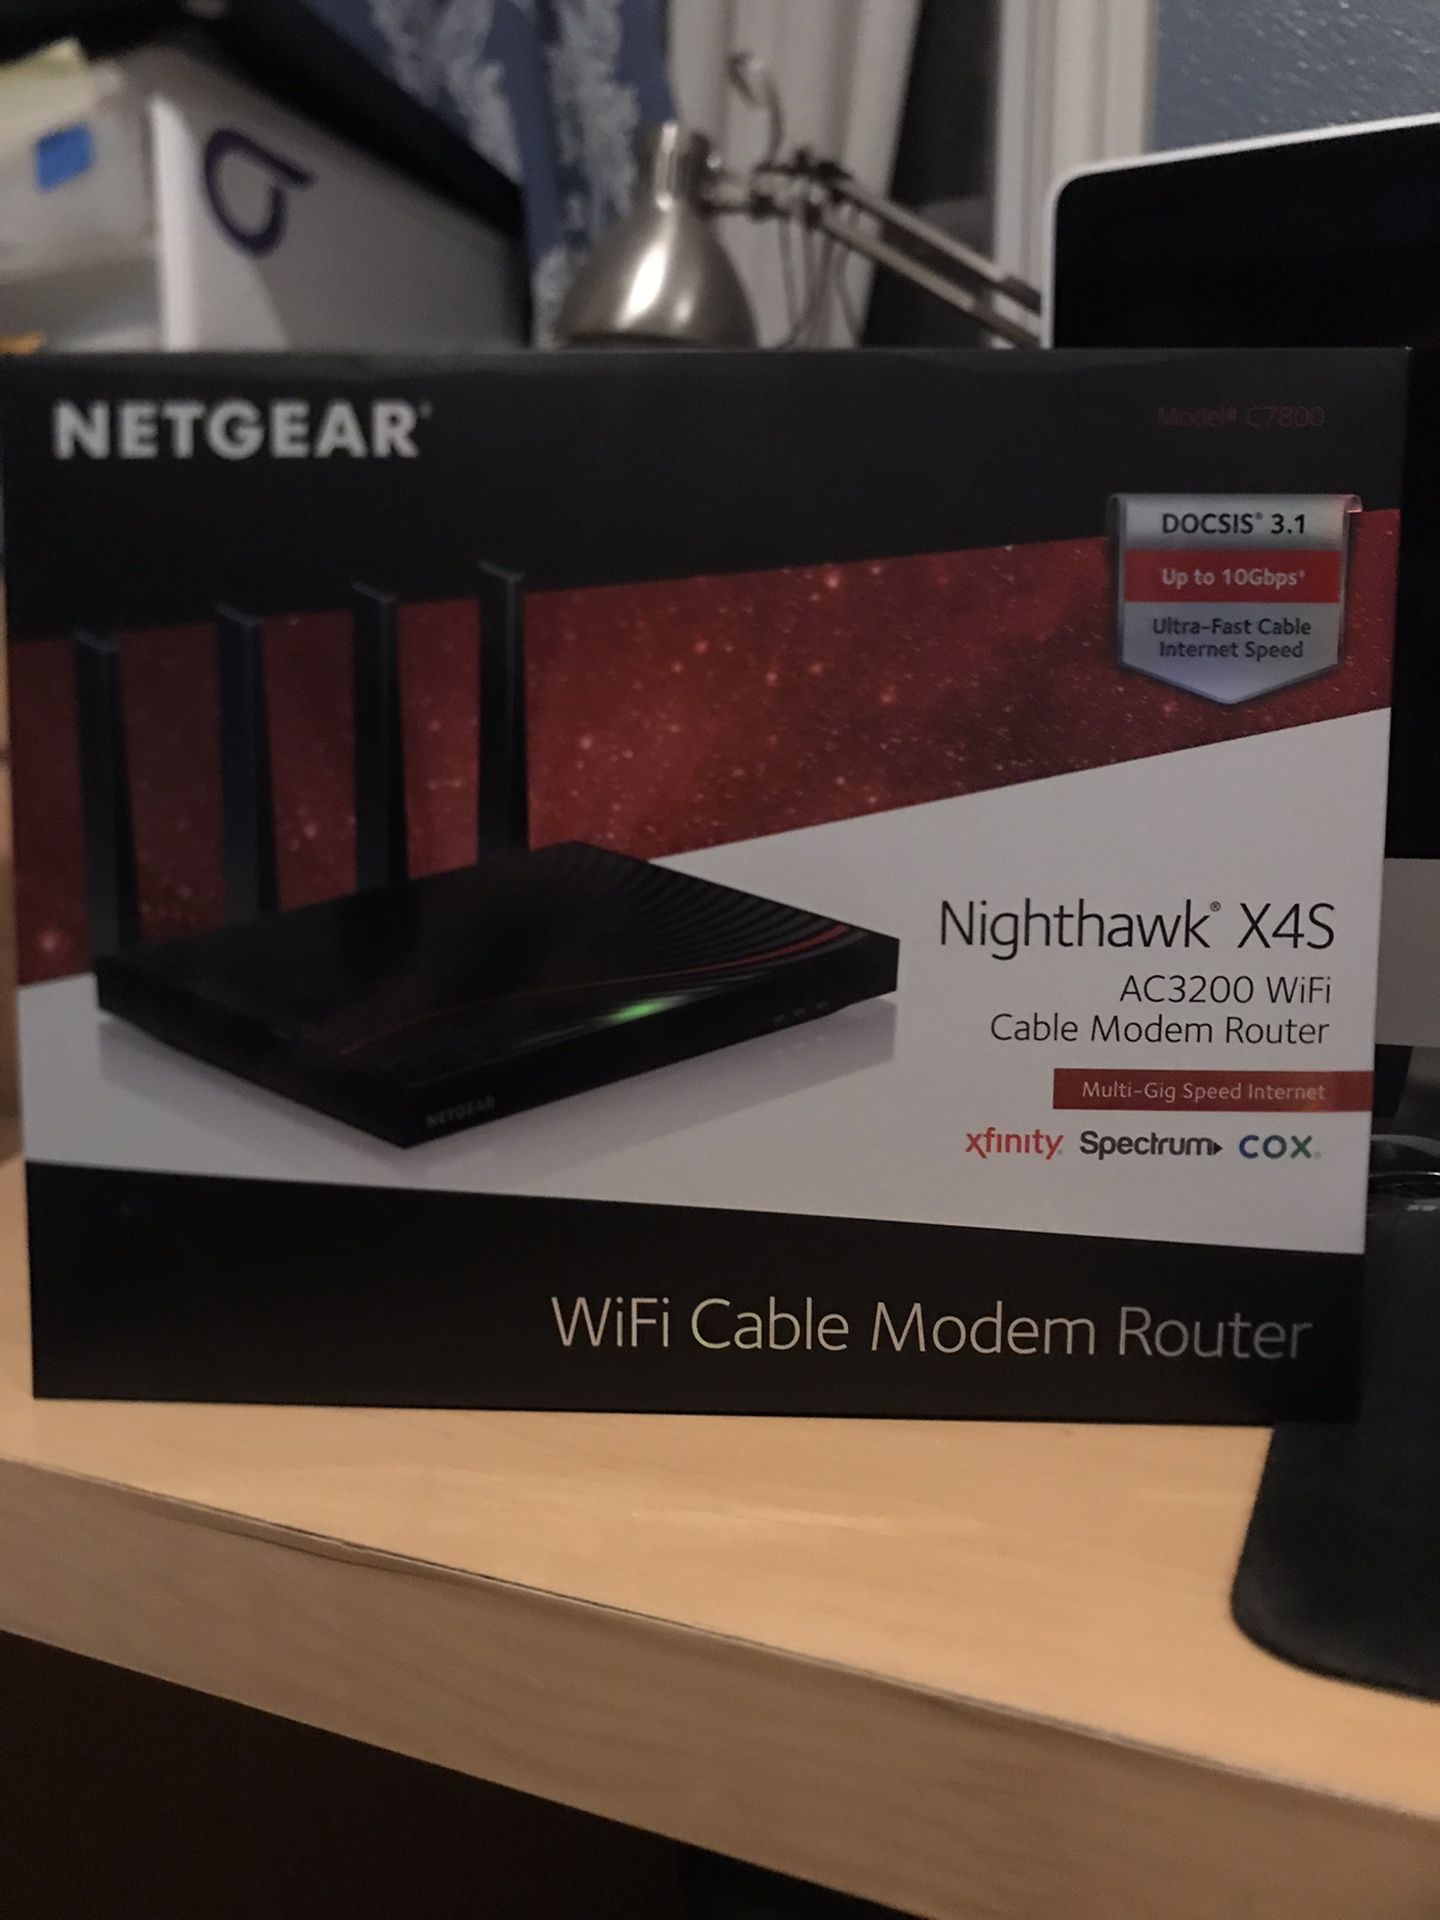 Netgear Nighthawk X4S (C7800) For Docisis 3.1 1000GB Speed